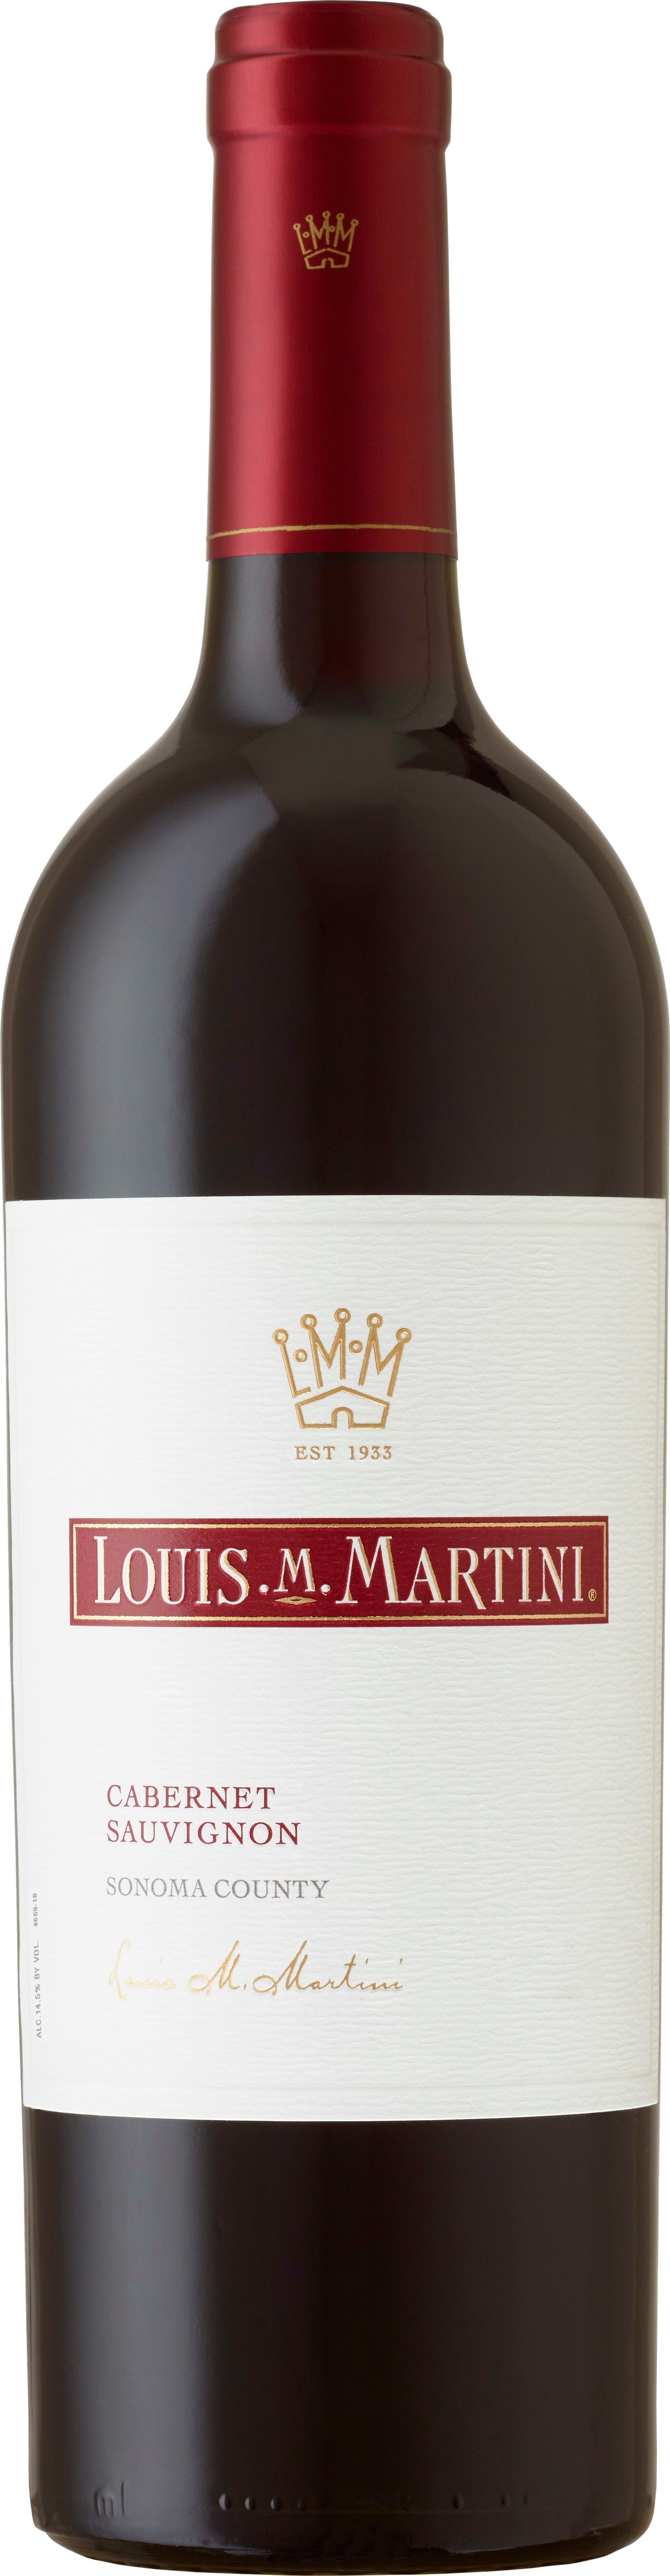 Louis M Martini Sonoma Cabernet Sauvignon 2020 75cl - Buy Louis M Martini Wines from GREAT WINES DIRECT wine shop